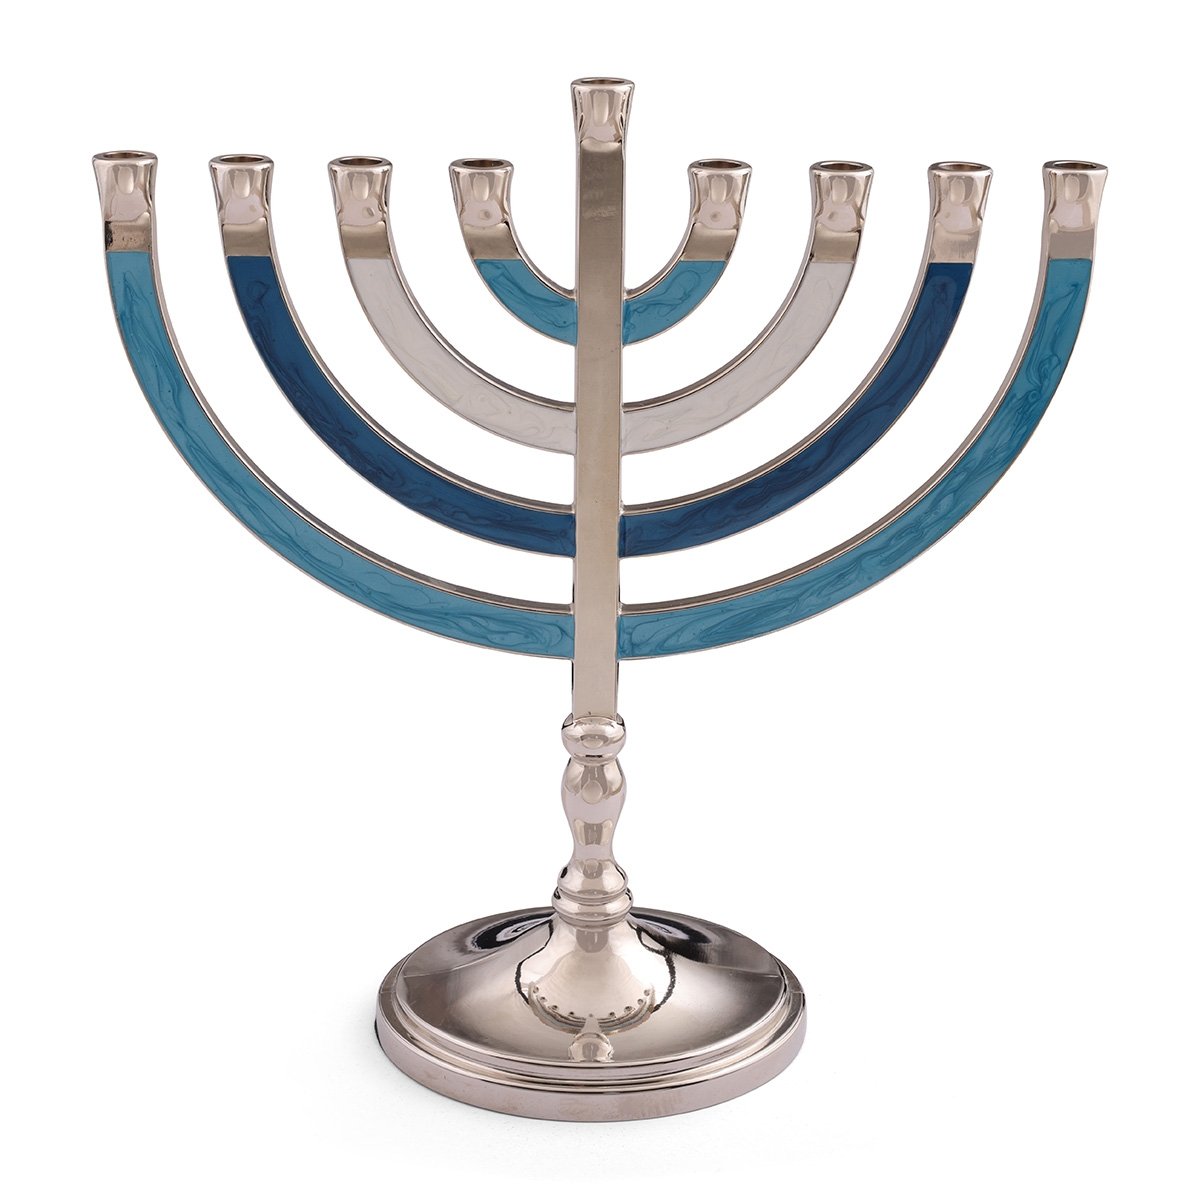 Your Hanukkah Essentials Buying Guide